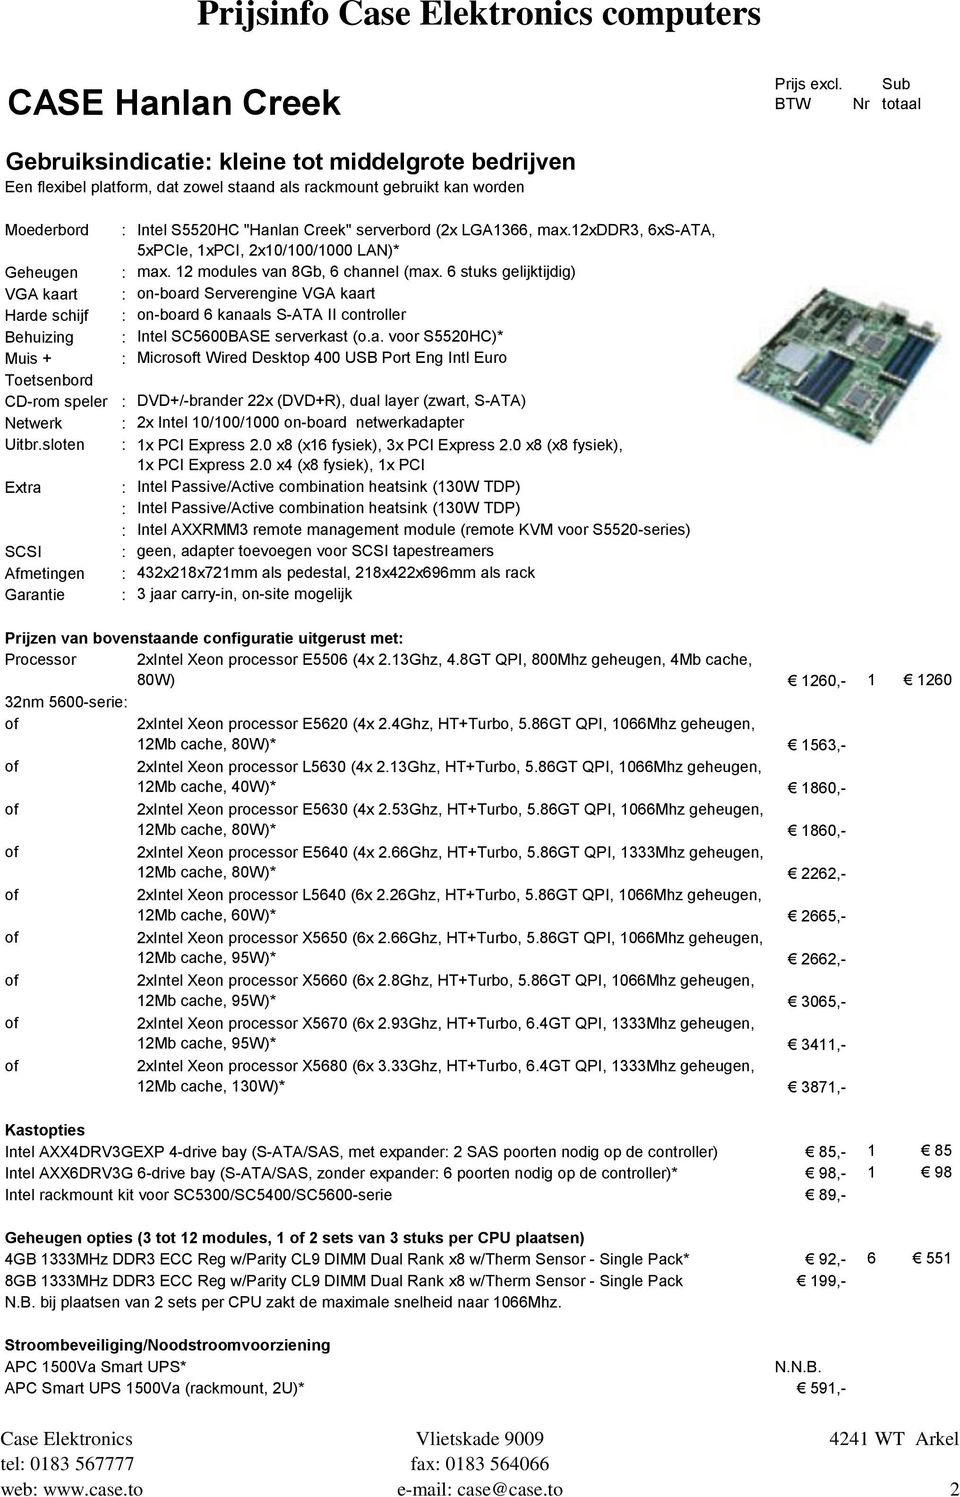 Muis + Toetsenbord CD-rom speler Netwerk Uitbr.sloten Extra SCSI Afmetingen Garantie : Intel S5520HC "Hanlan Creek" serverbord (2x LGA1366, max.